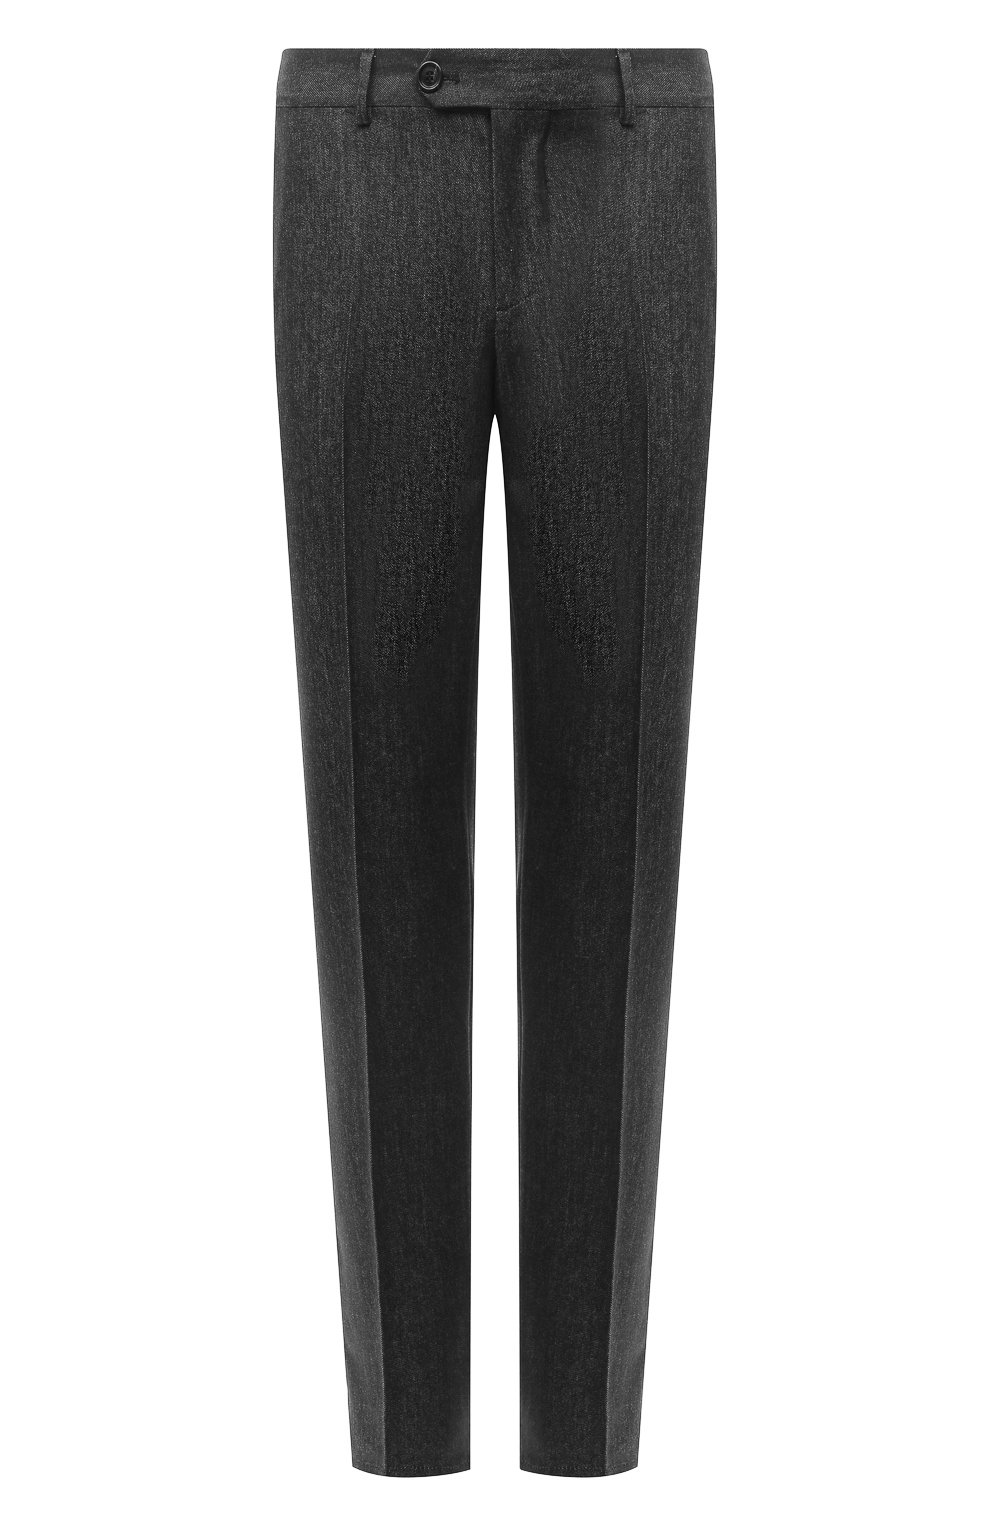 Мужские шерстяные брюки BRUNELLO CUCINELLI се рого цвета, арт. ML476B1770 | Фото 1 (Материал внешний: Шерсть; Длина (брюки, джинсы): Стандартные; Случай: Повседневный; Материал сплава: Проставлено; Драгоценные камни: Проставлено; Стили: Кэжуэл)